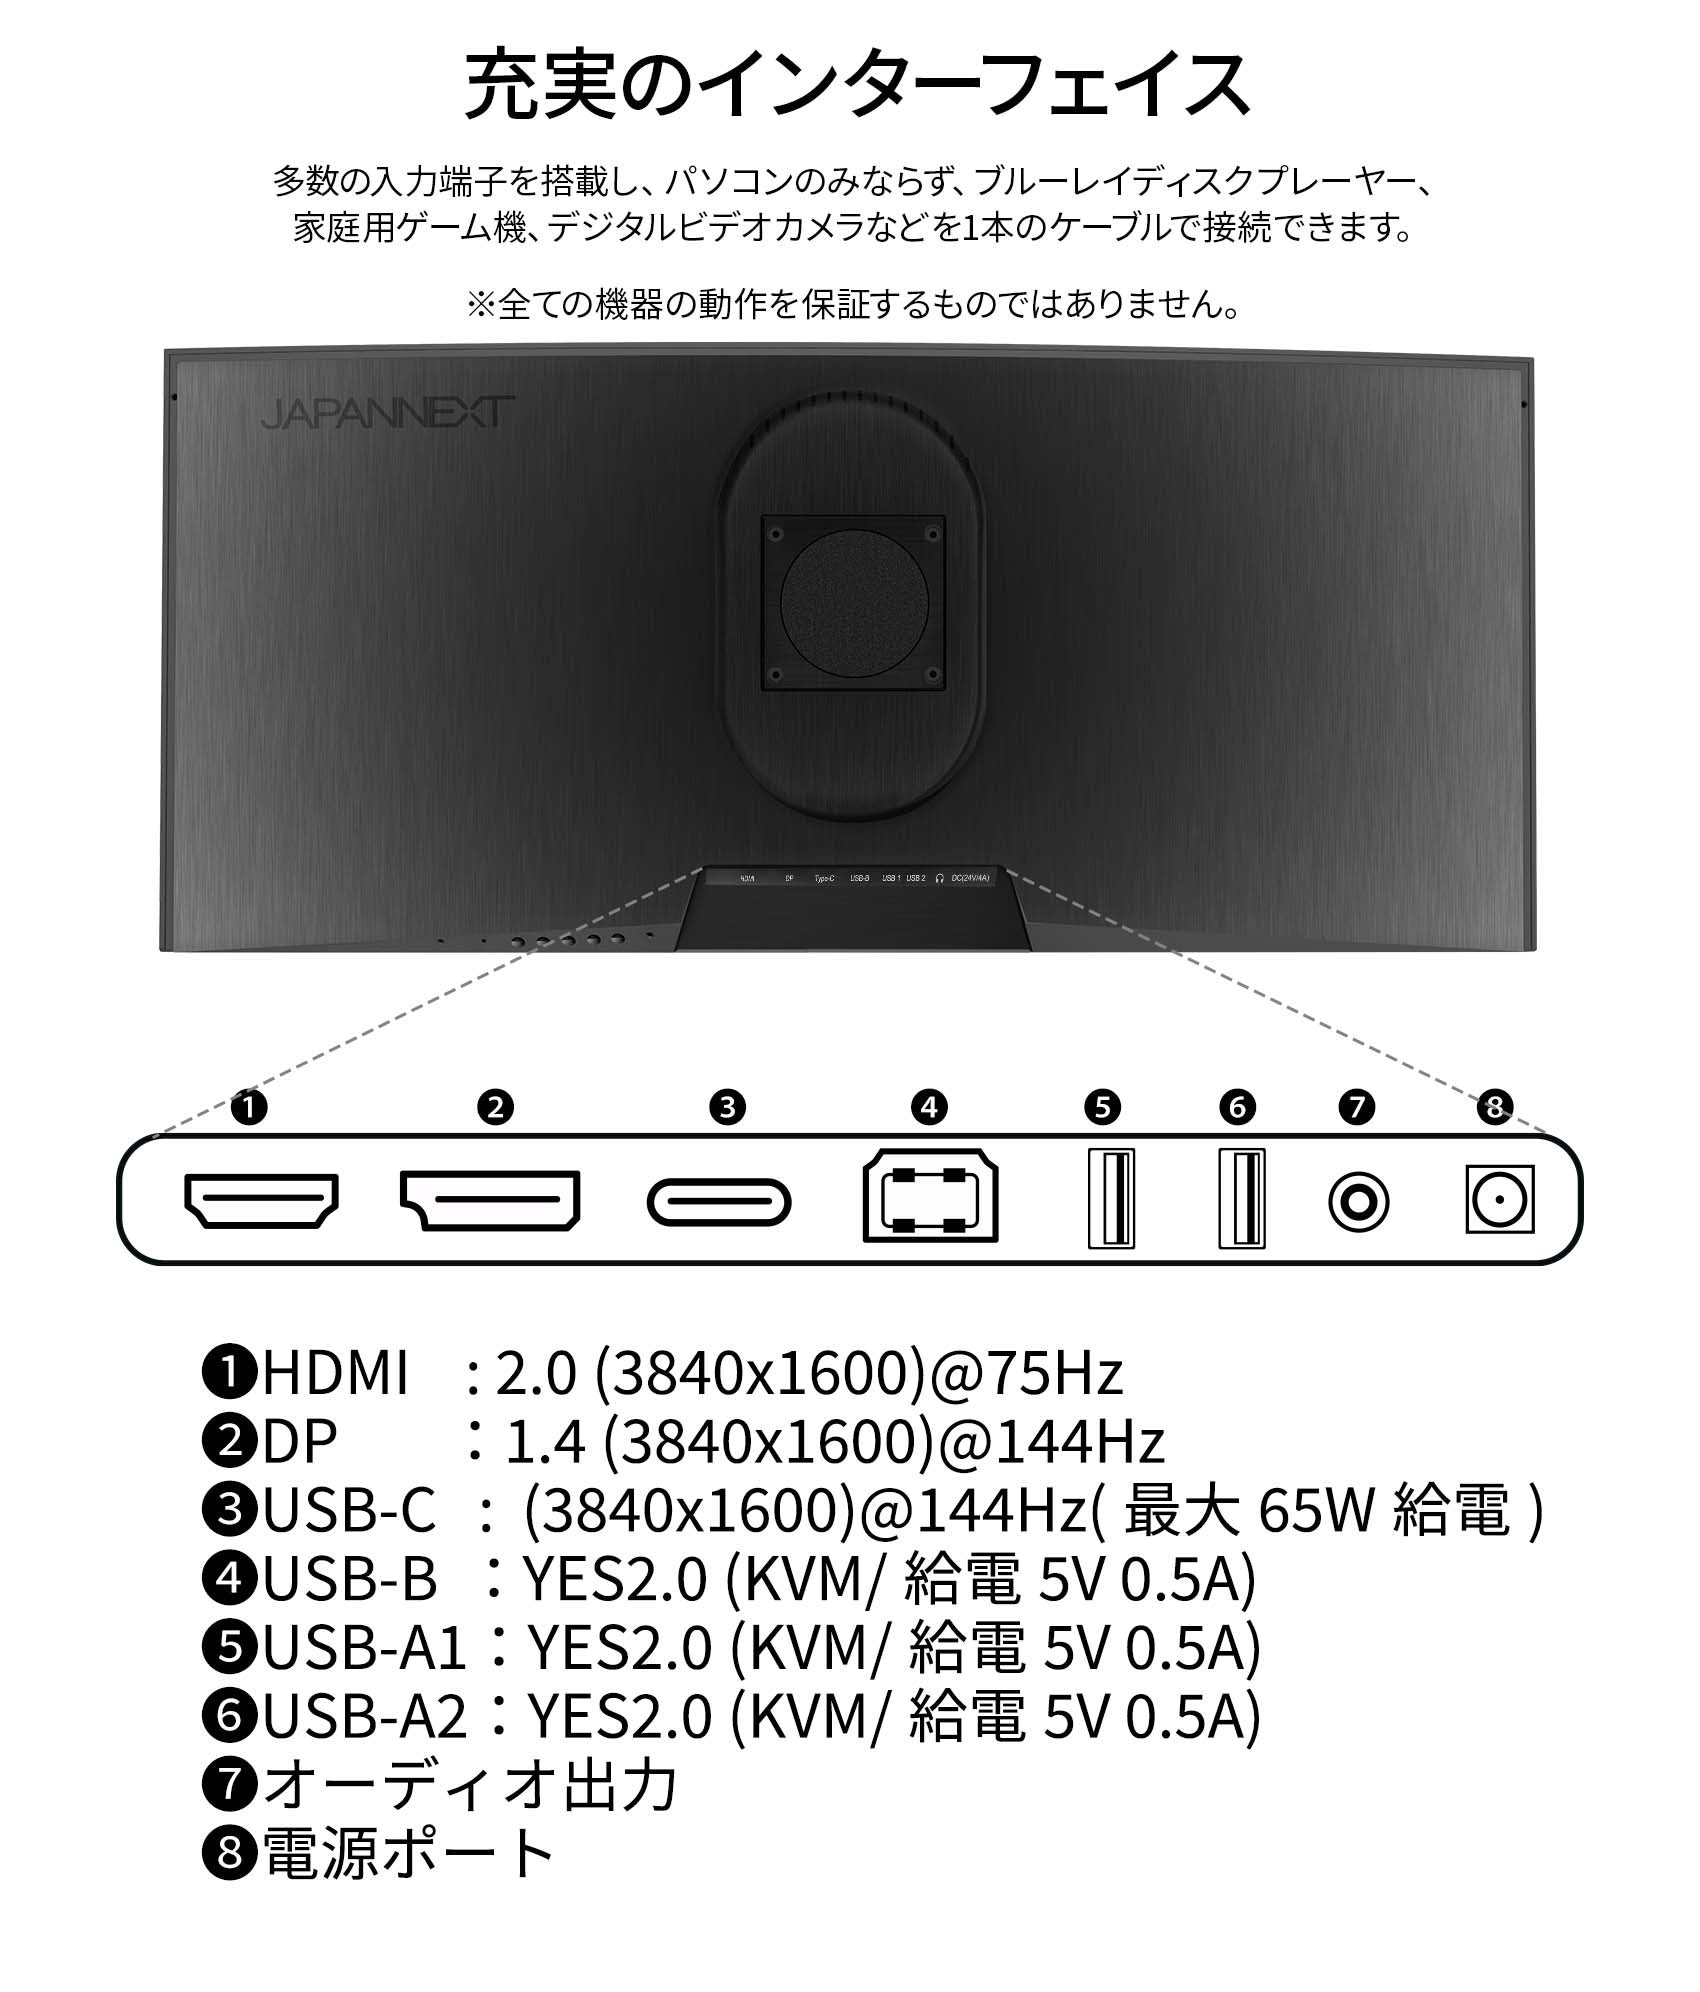 JAPANNEXT 37.5インチ曲面 IPSパネル UWQHD+(3840 x 1600)解像度